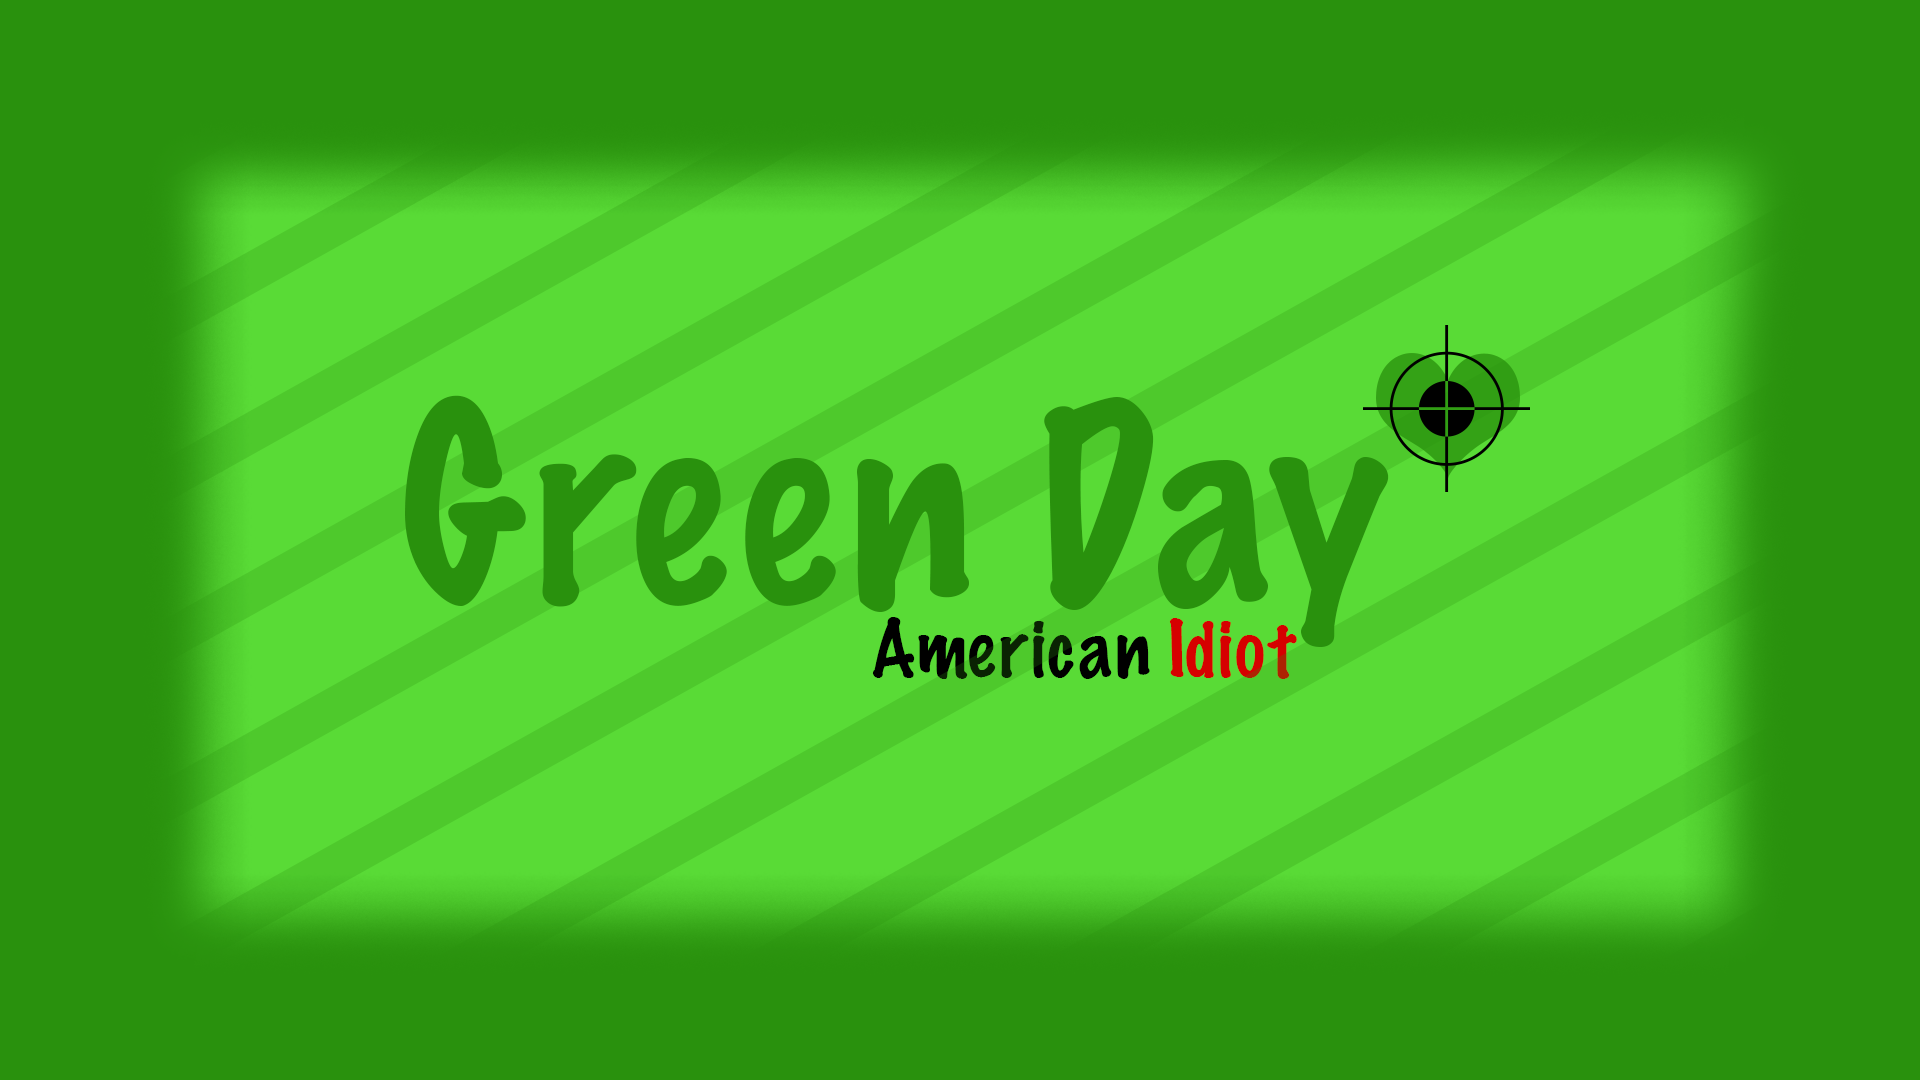 Green Day (American Idiot) Wallpaper by JaySk8 on DeviantArt